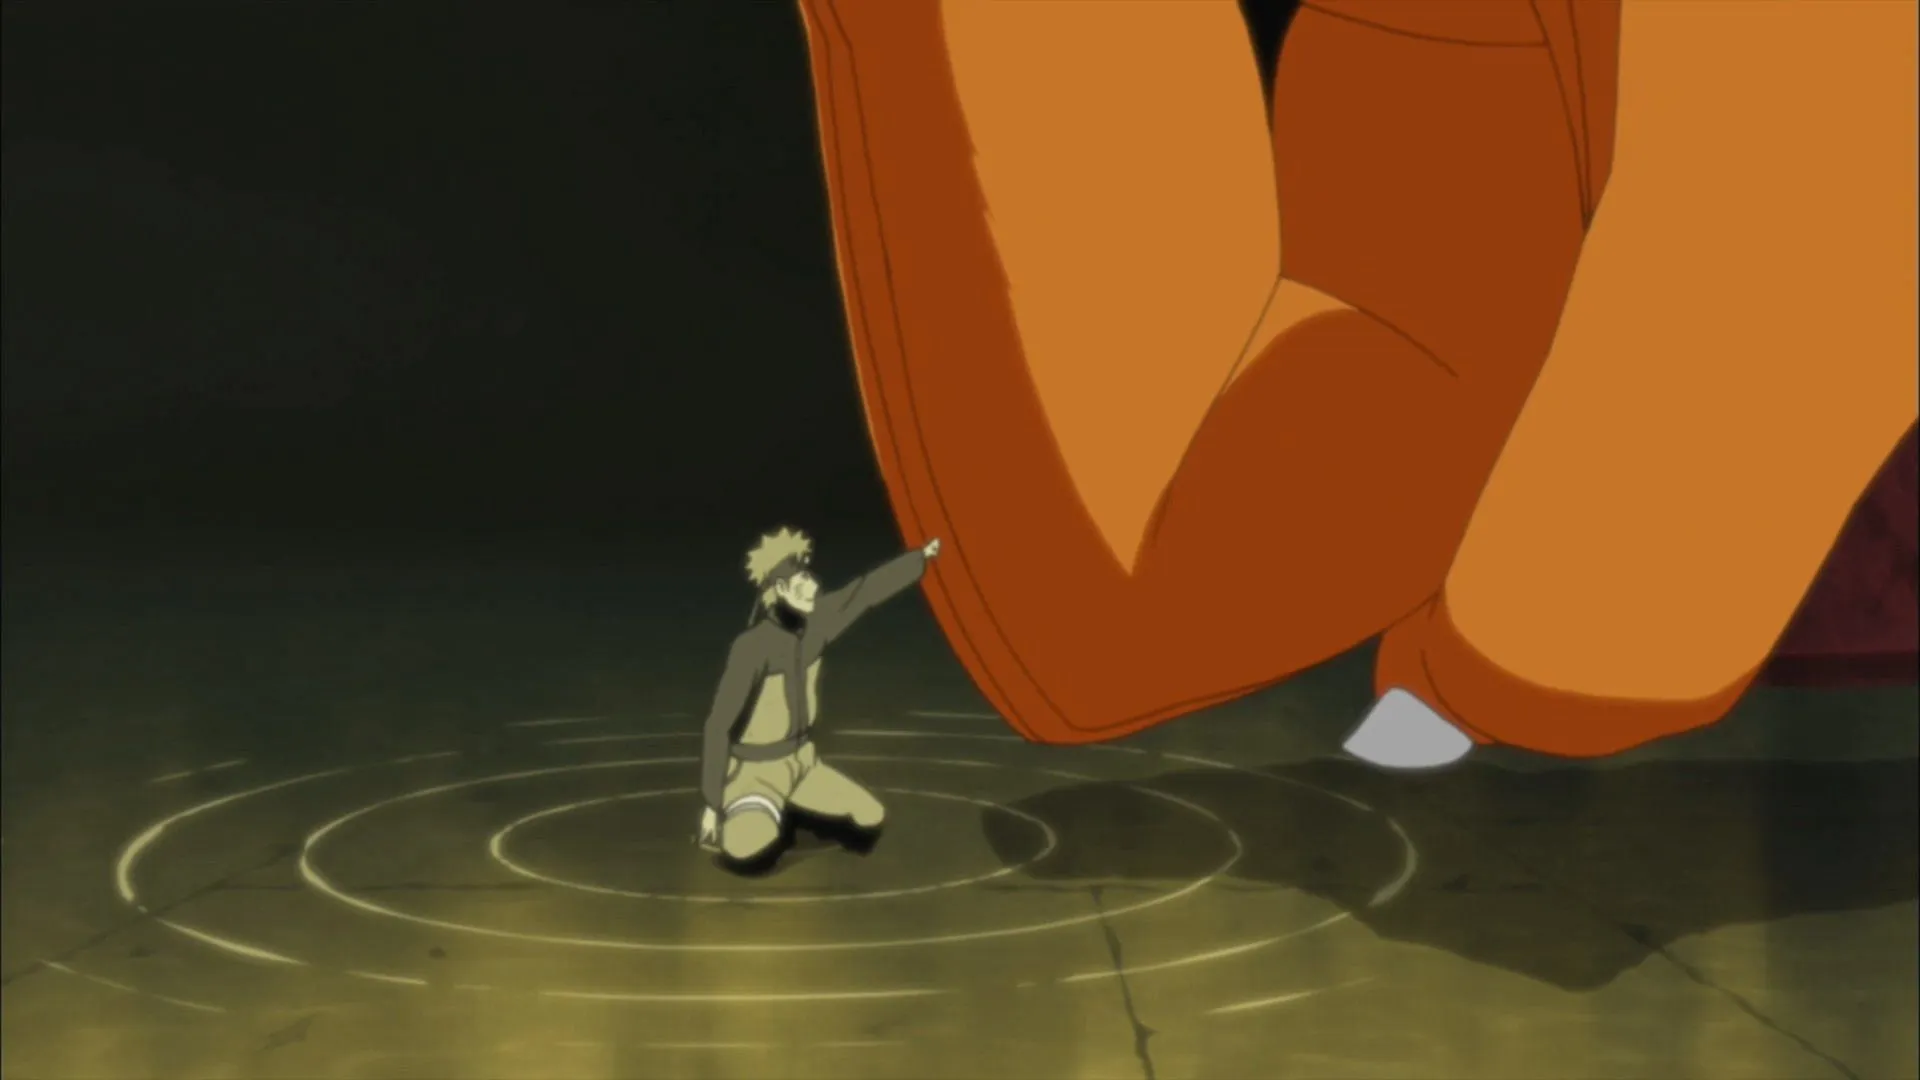 Naruto shared a special bond with Kurama in the anime series (Image via Studio Pierrot)